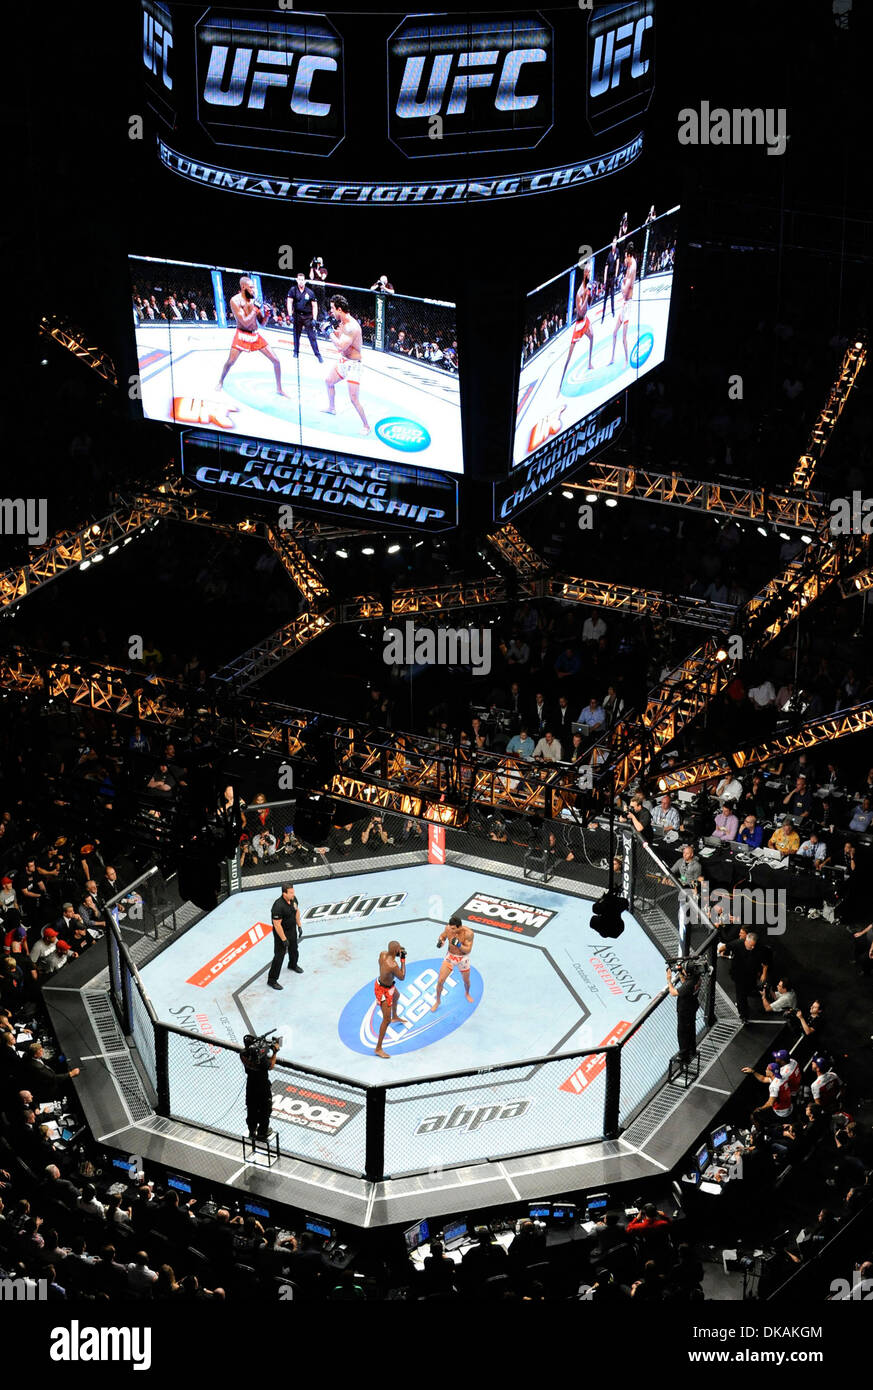 UFC228  Iphone X Wallpaper  Sanchez vs White  1 by RowdyDynasty on  DeviantArt